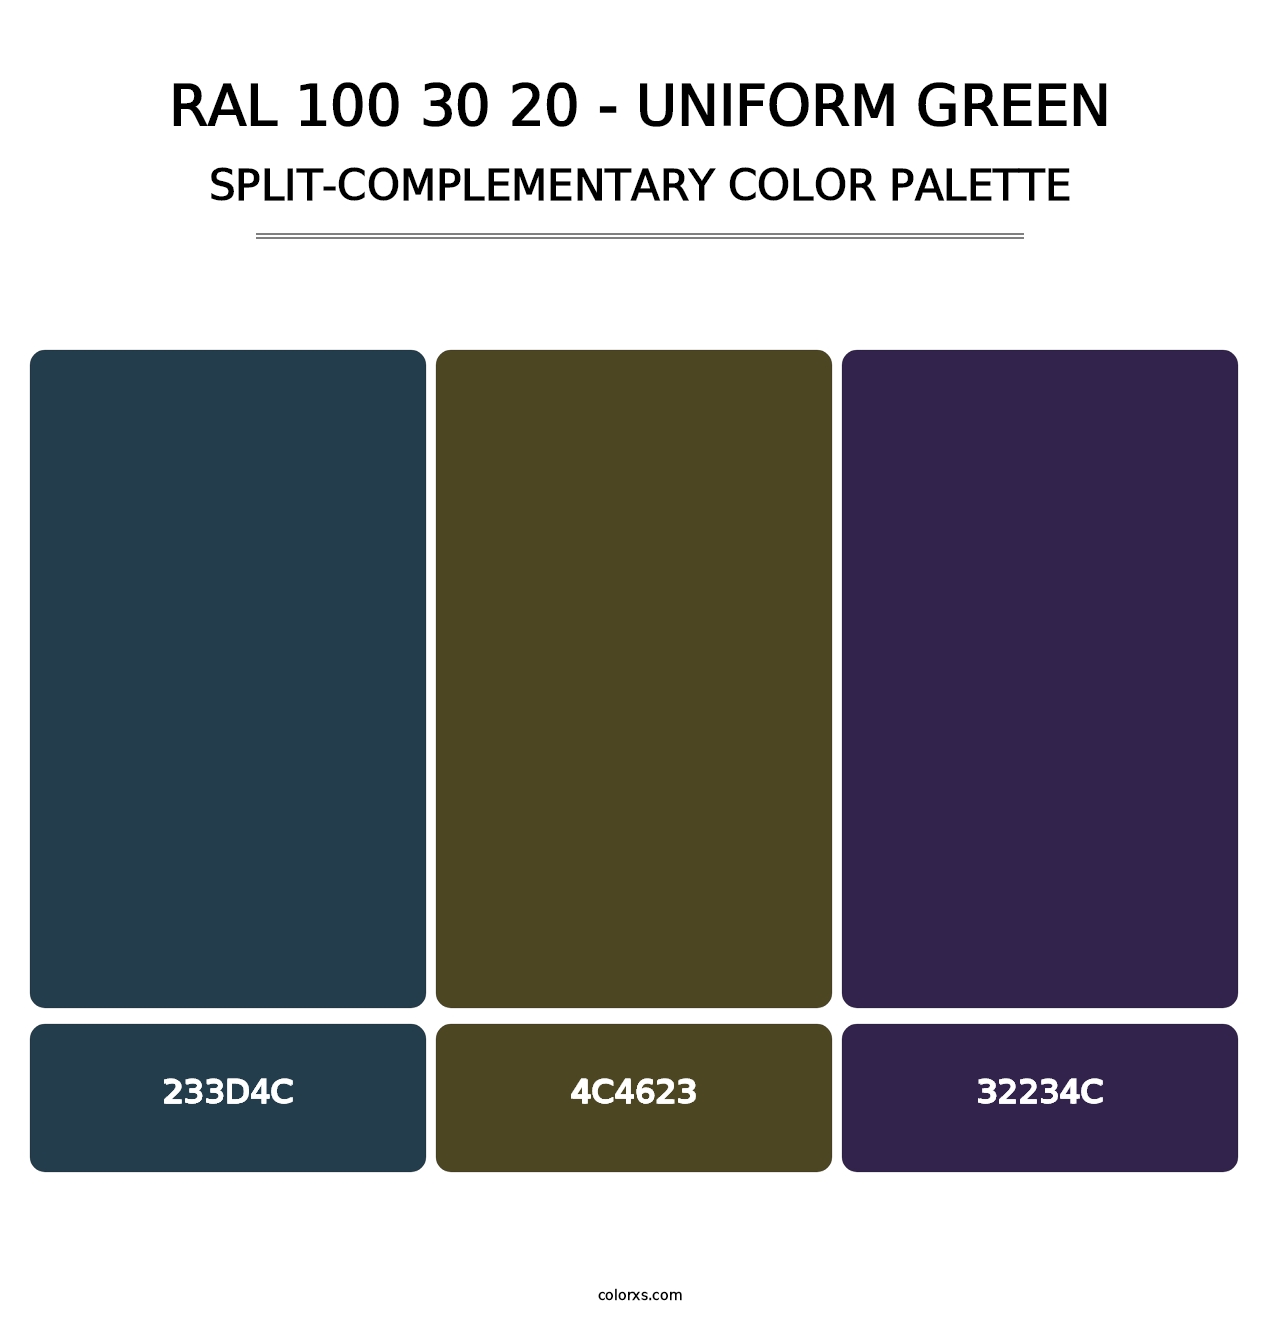 RAL 100 30 20 - Uniform Green - Split-Complementary Color Palette